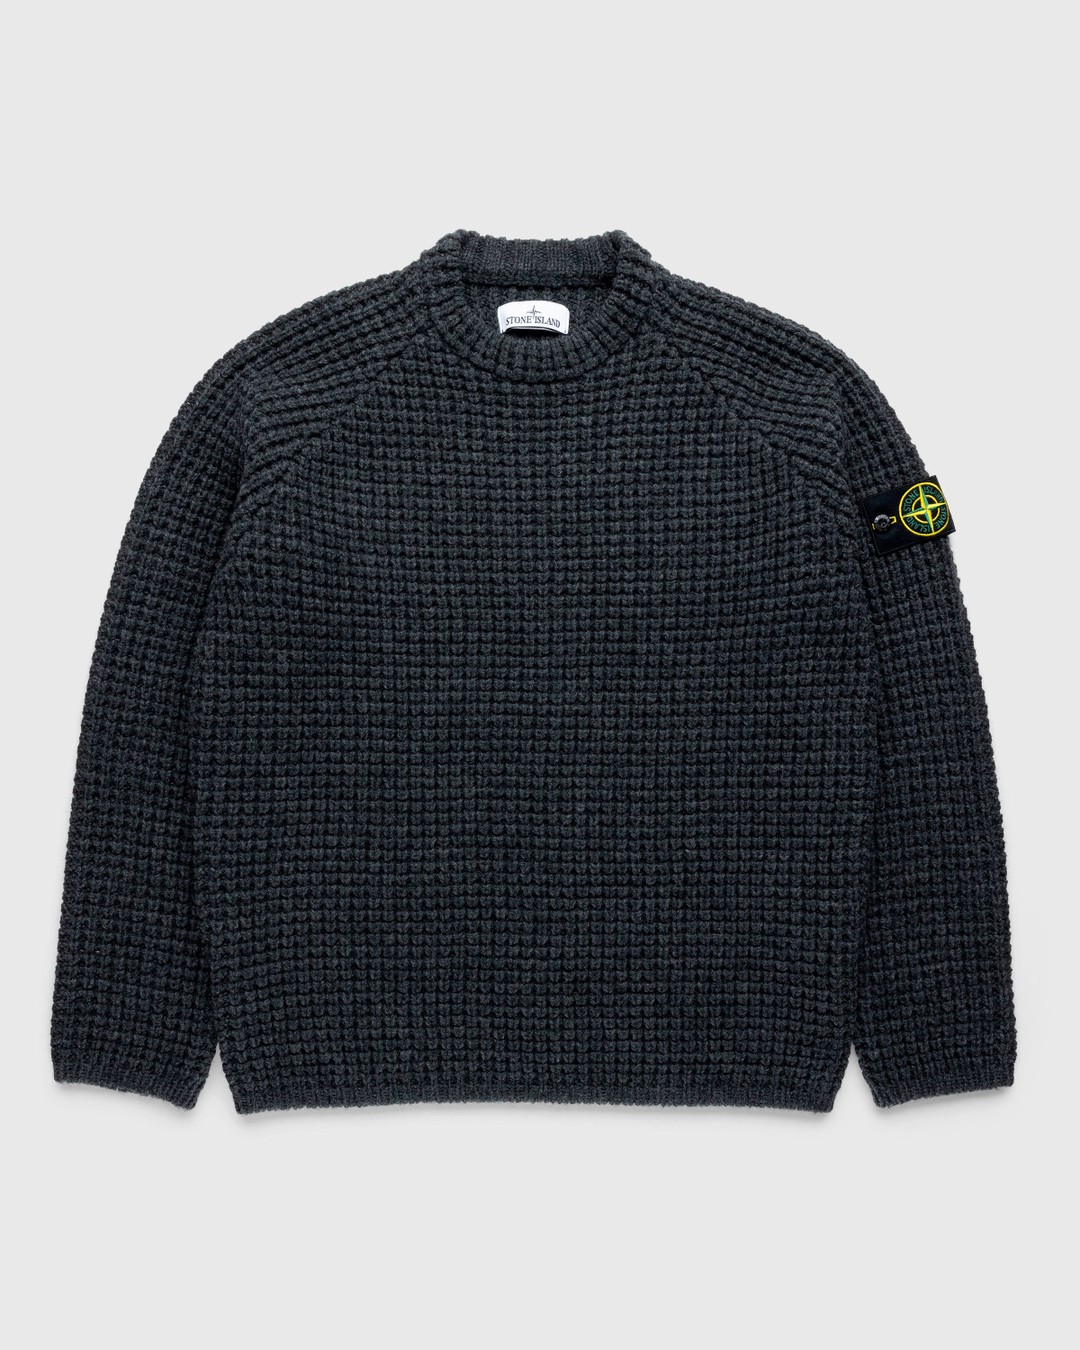 Stone Island – Waffle Knit Sweater Melange Charcoal - Knitwear - Grey - Image 1